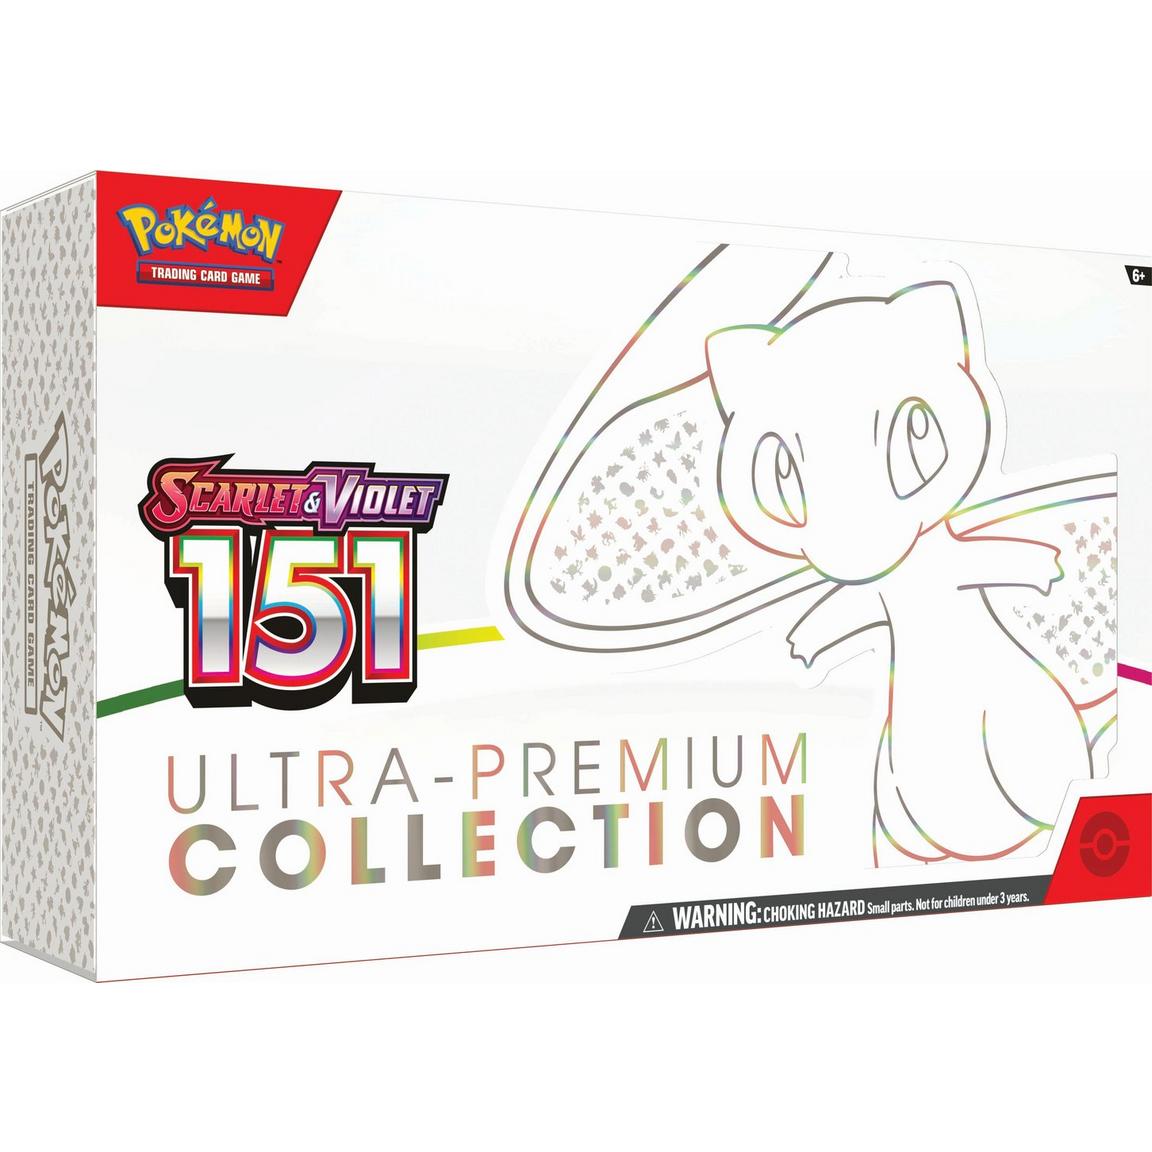 Pokemon: Scarlet & Violet 151- Ultra-Premium Collection PRESALE